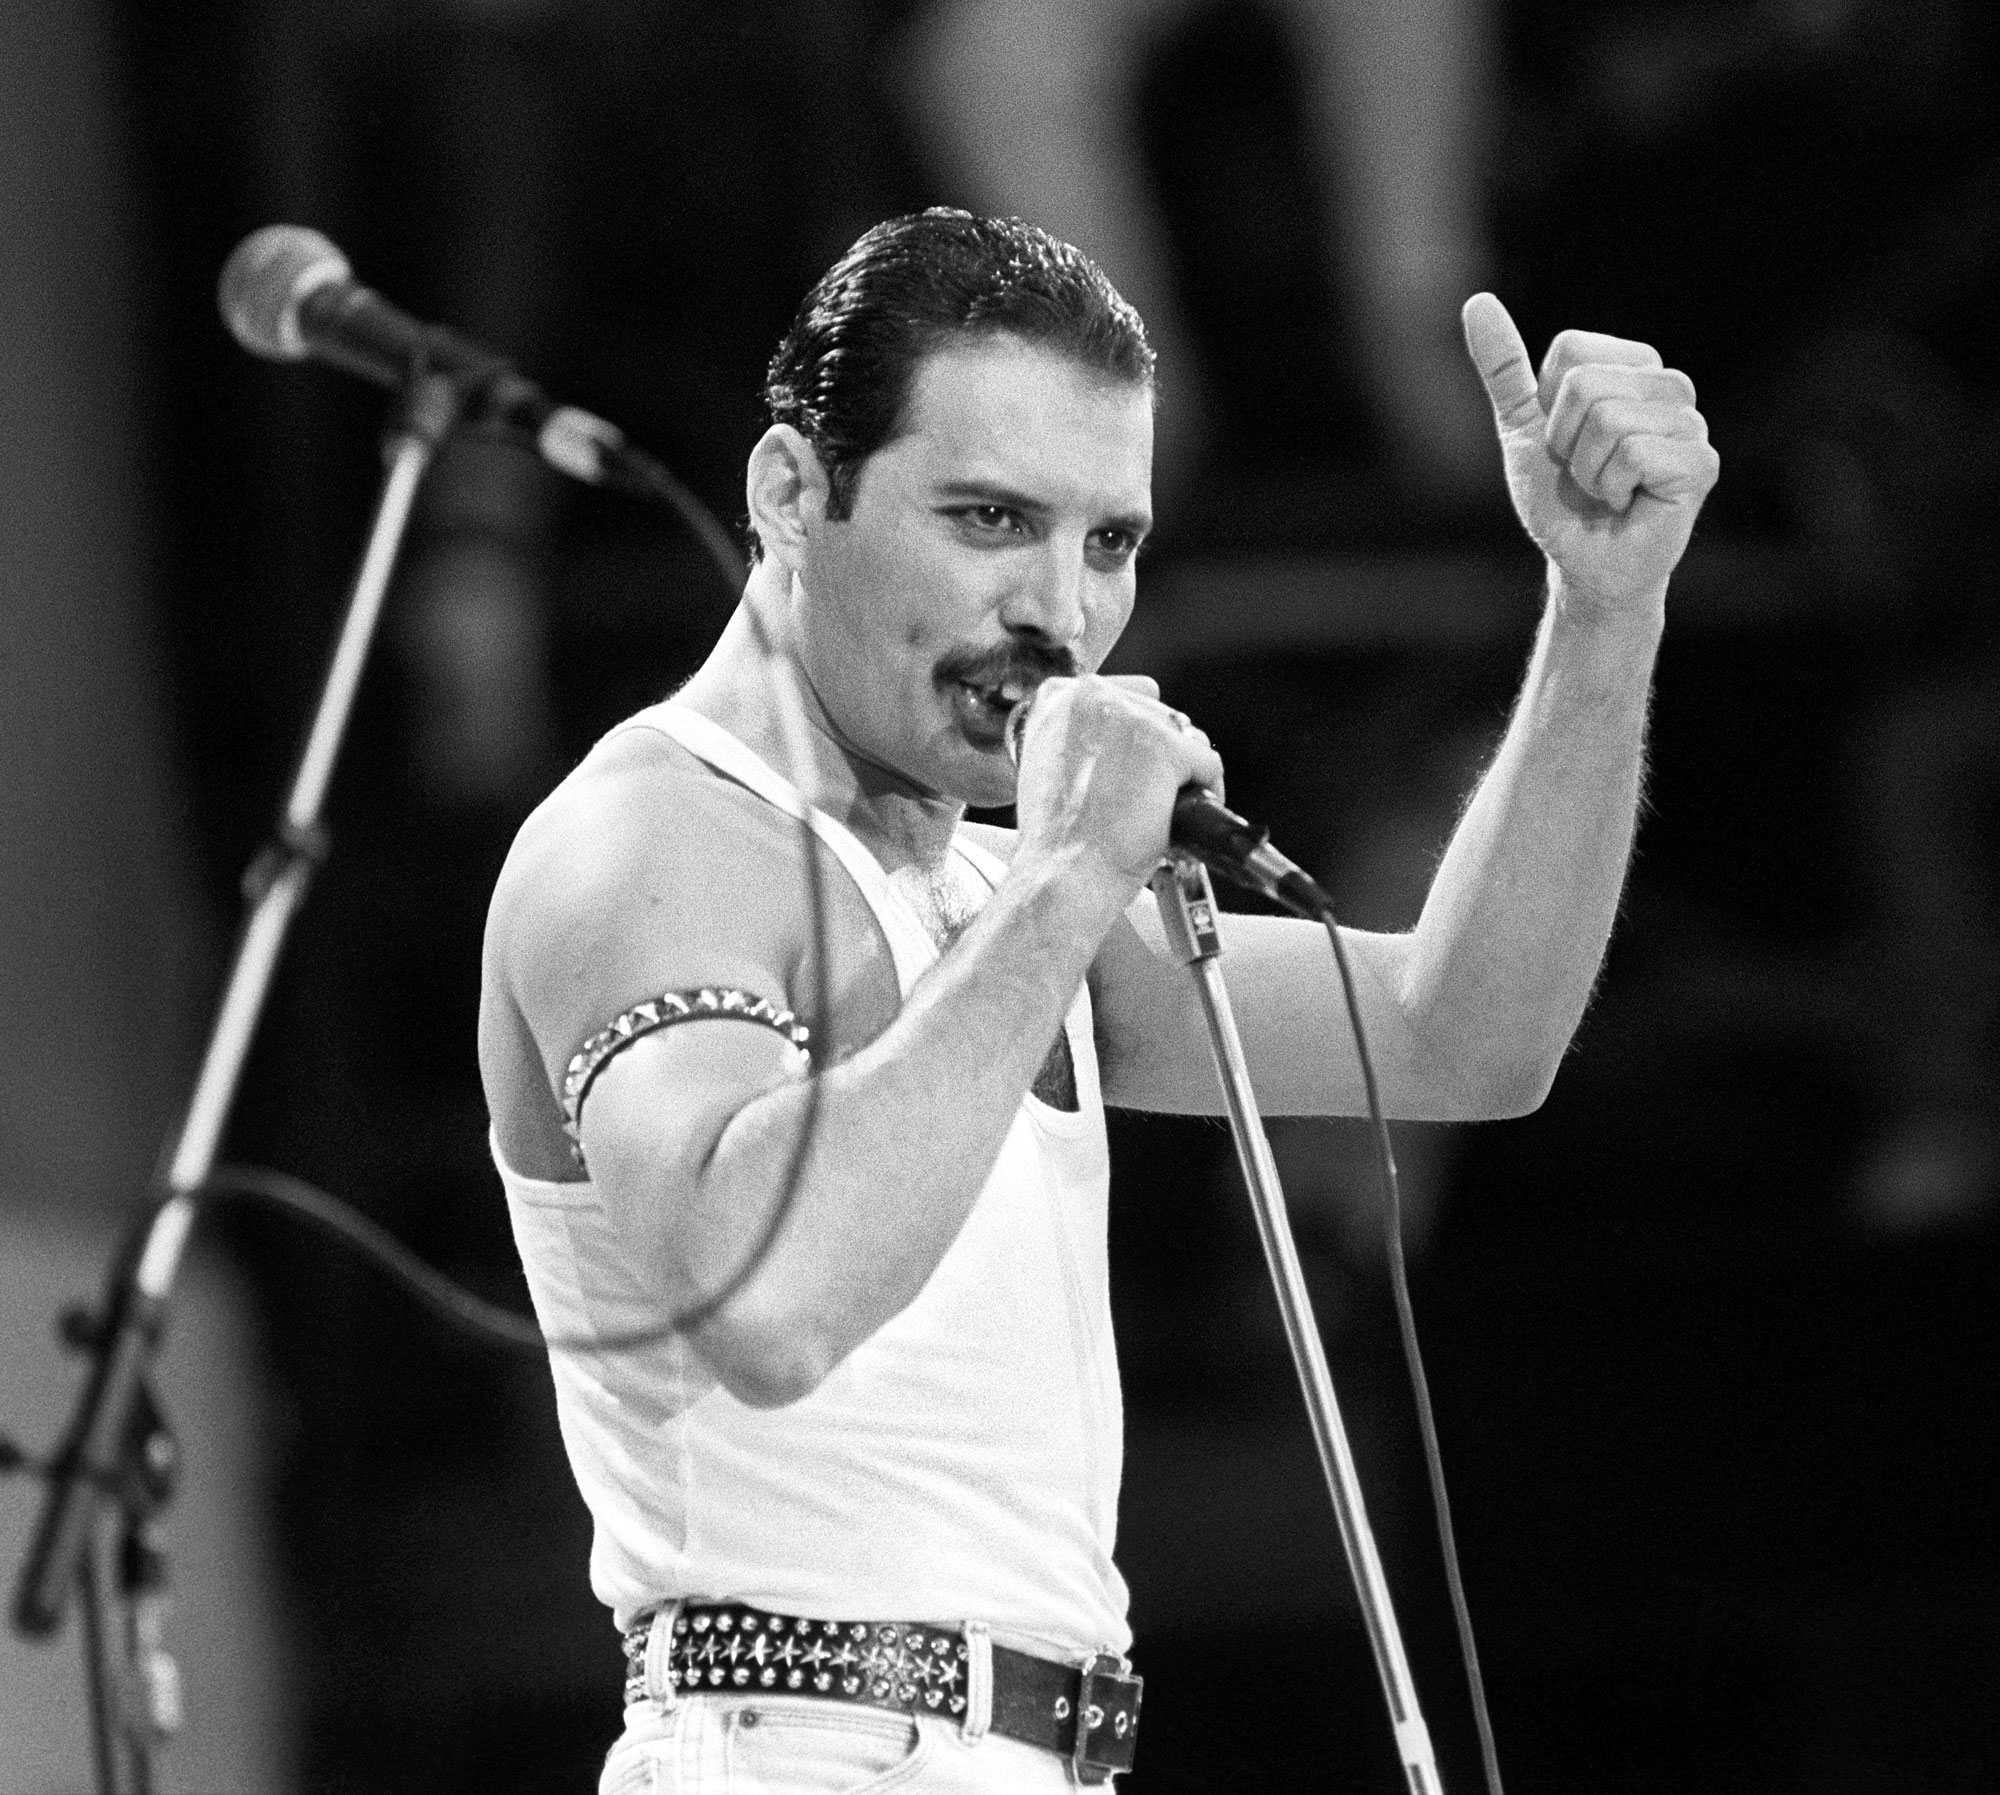 Queen's Freddie Mercury performing at Live Aid in 